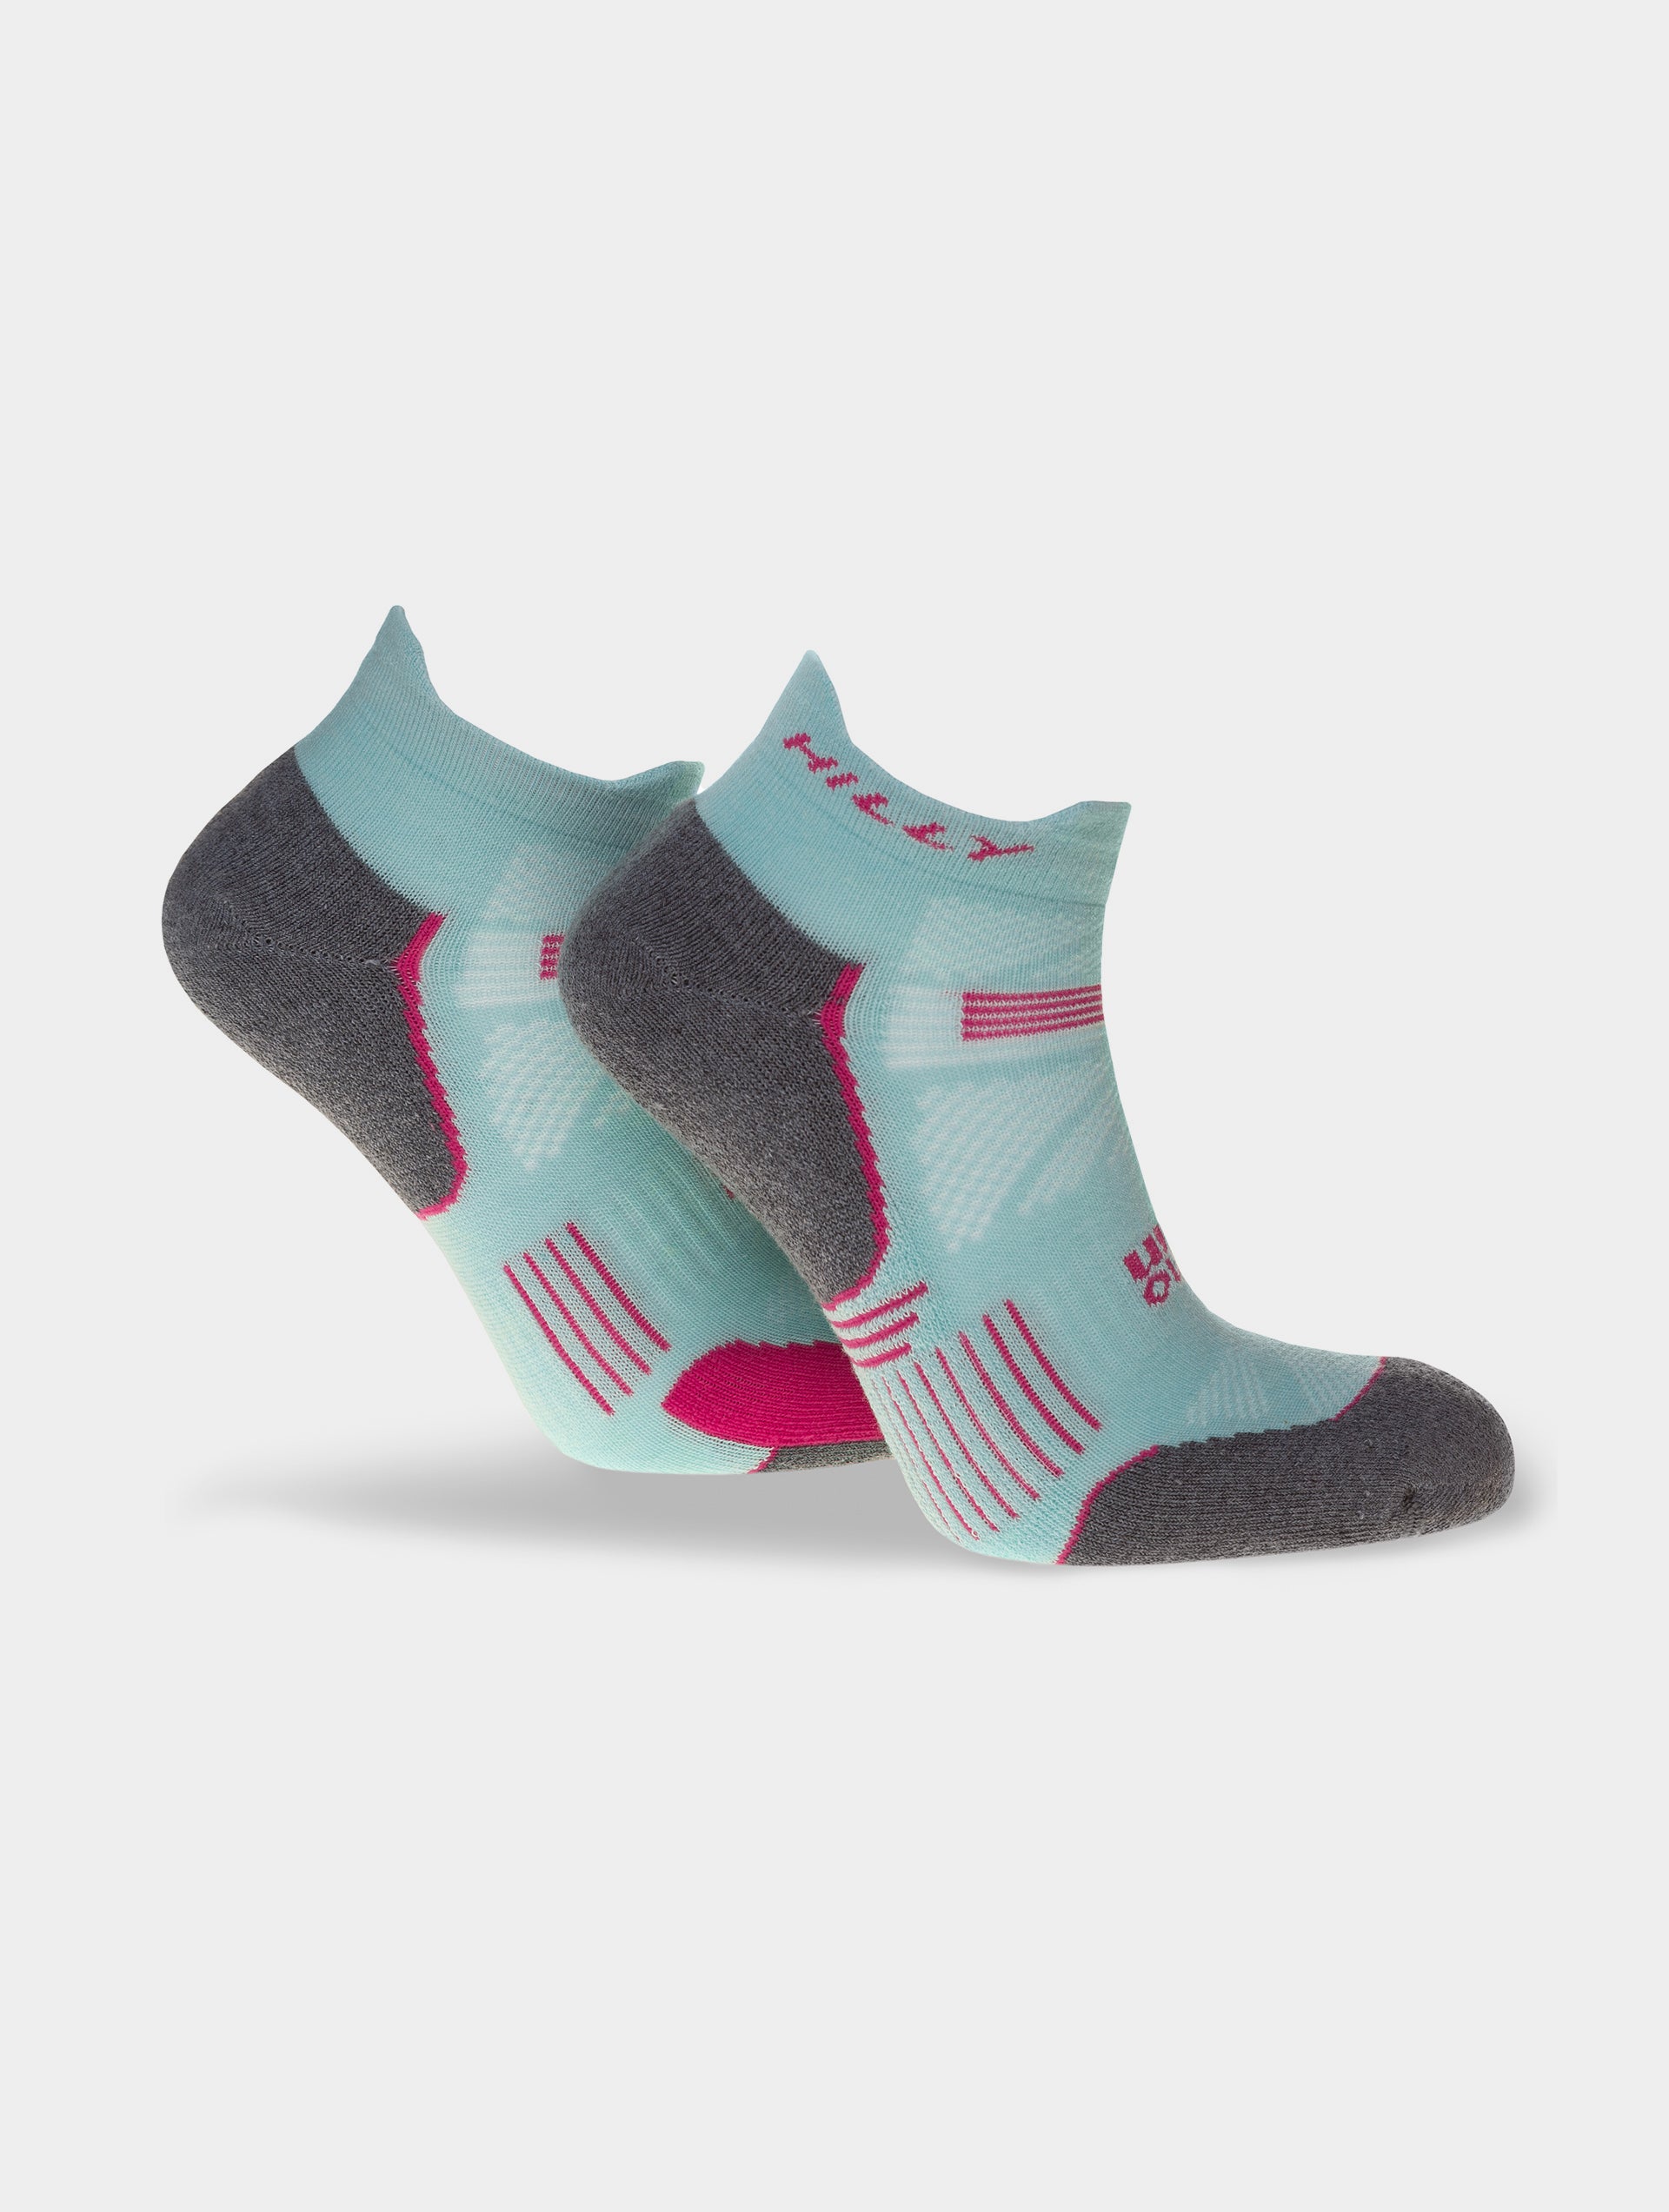 6 Pairs Womens No Show Socks Running Socks Cushioned Athletic Ankle  Socks(L(39-42cm),Orange)